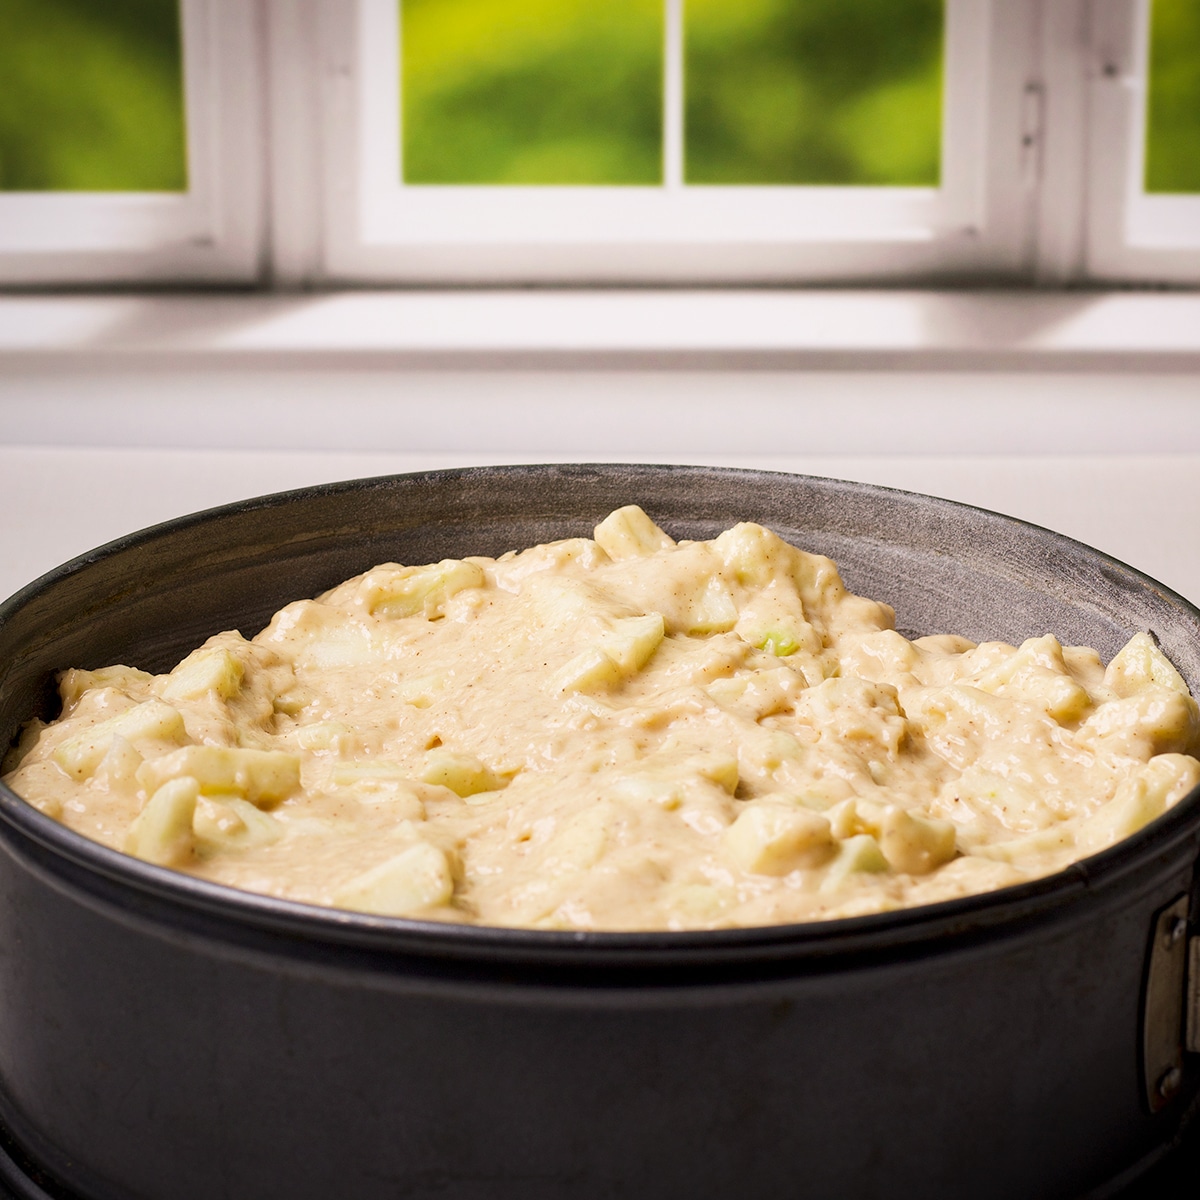 A springform pan containing Irish Apple Cake batter, ready to bake.